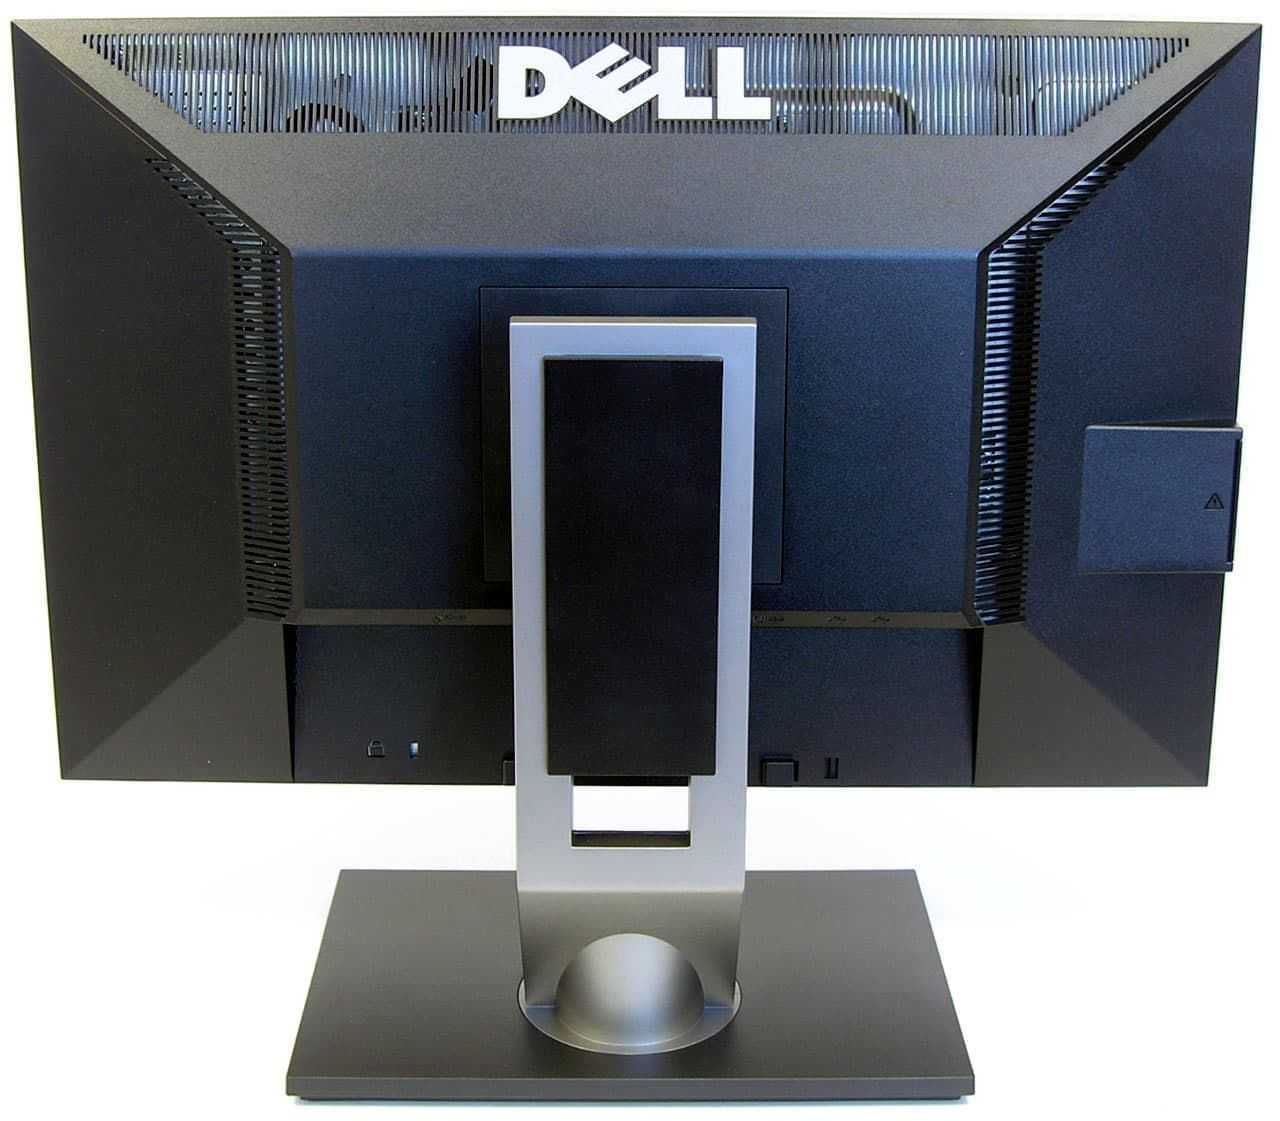 Dell 2209wa отзывы покупателей и специалистов на отзовик